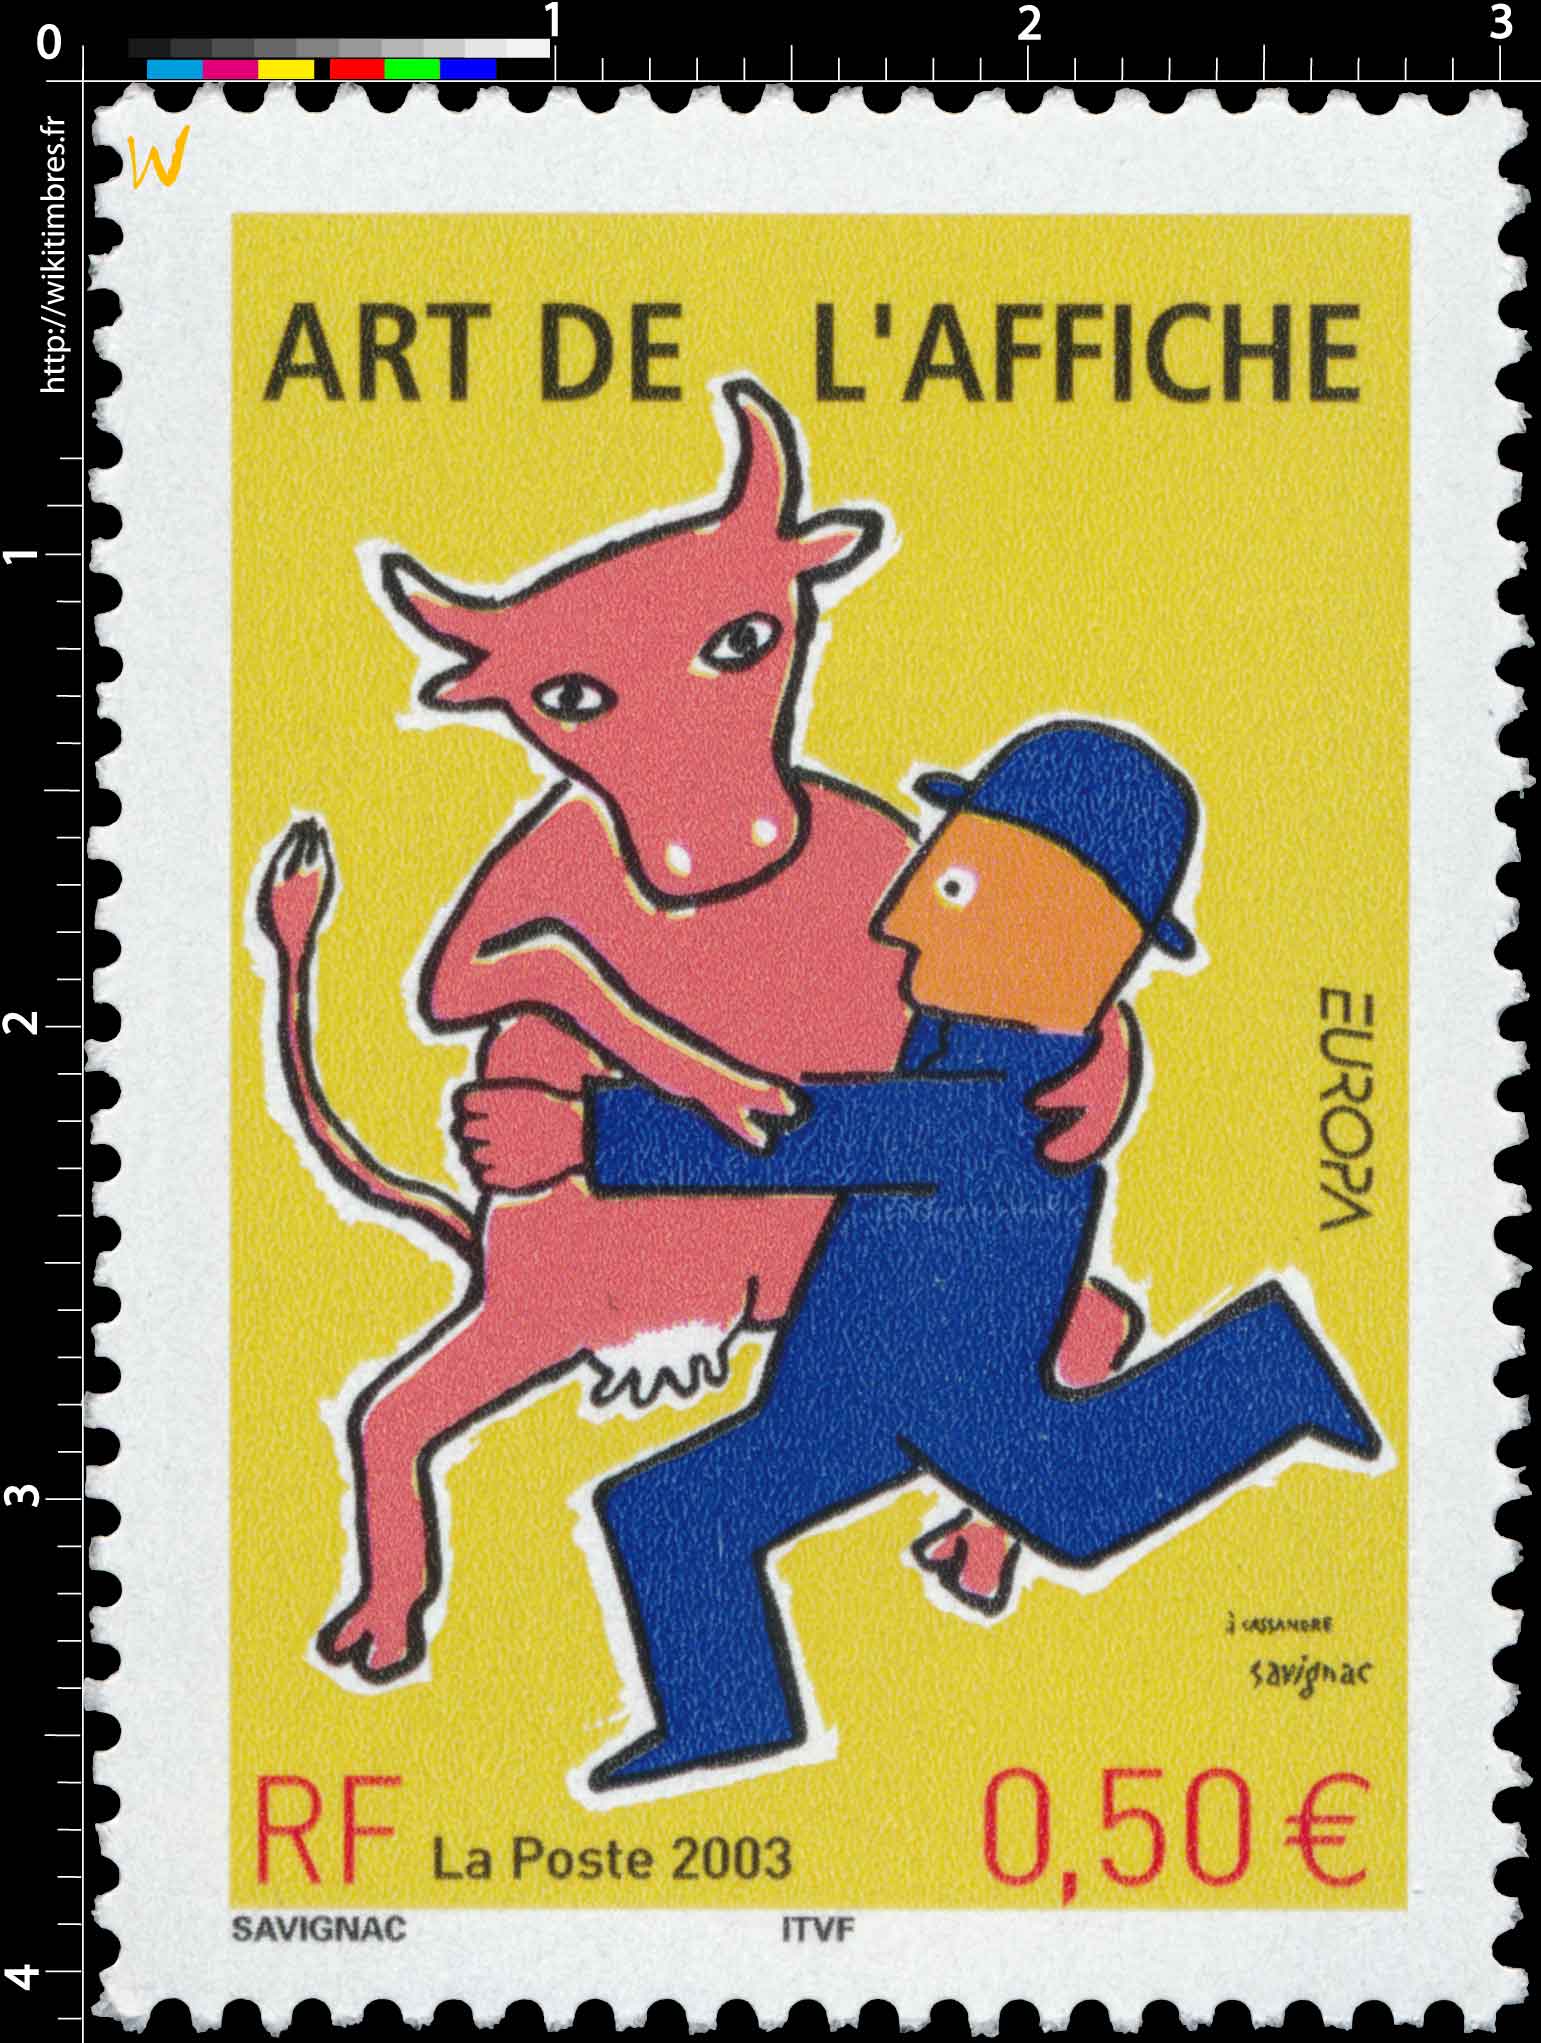 2003 EUROPA ART DE L'AFFICHE